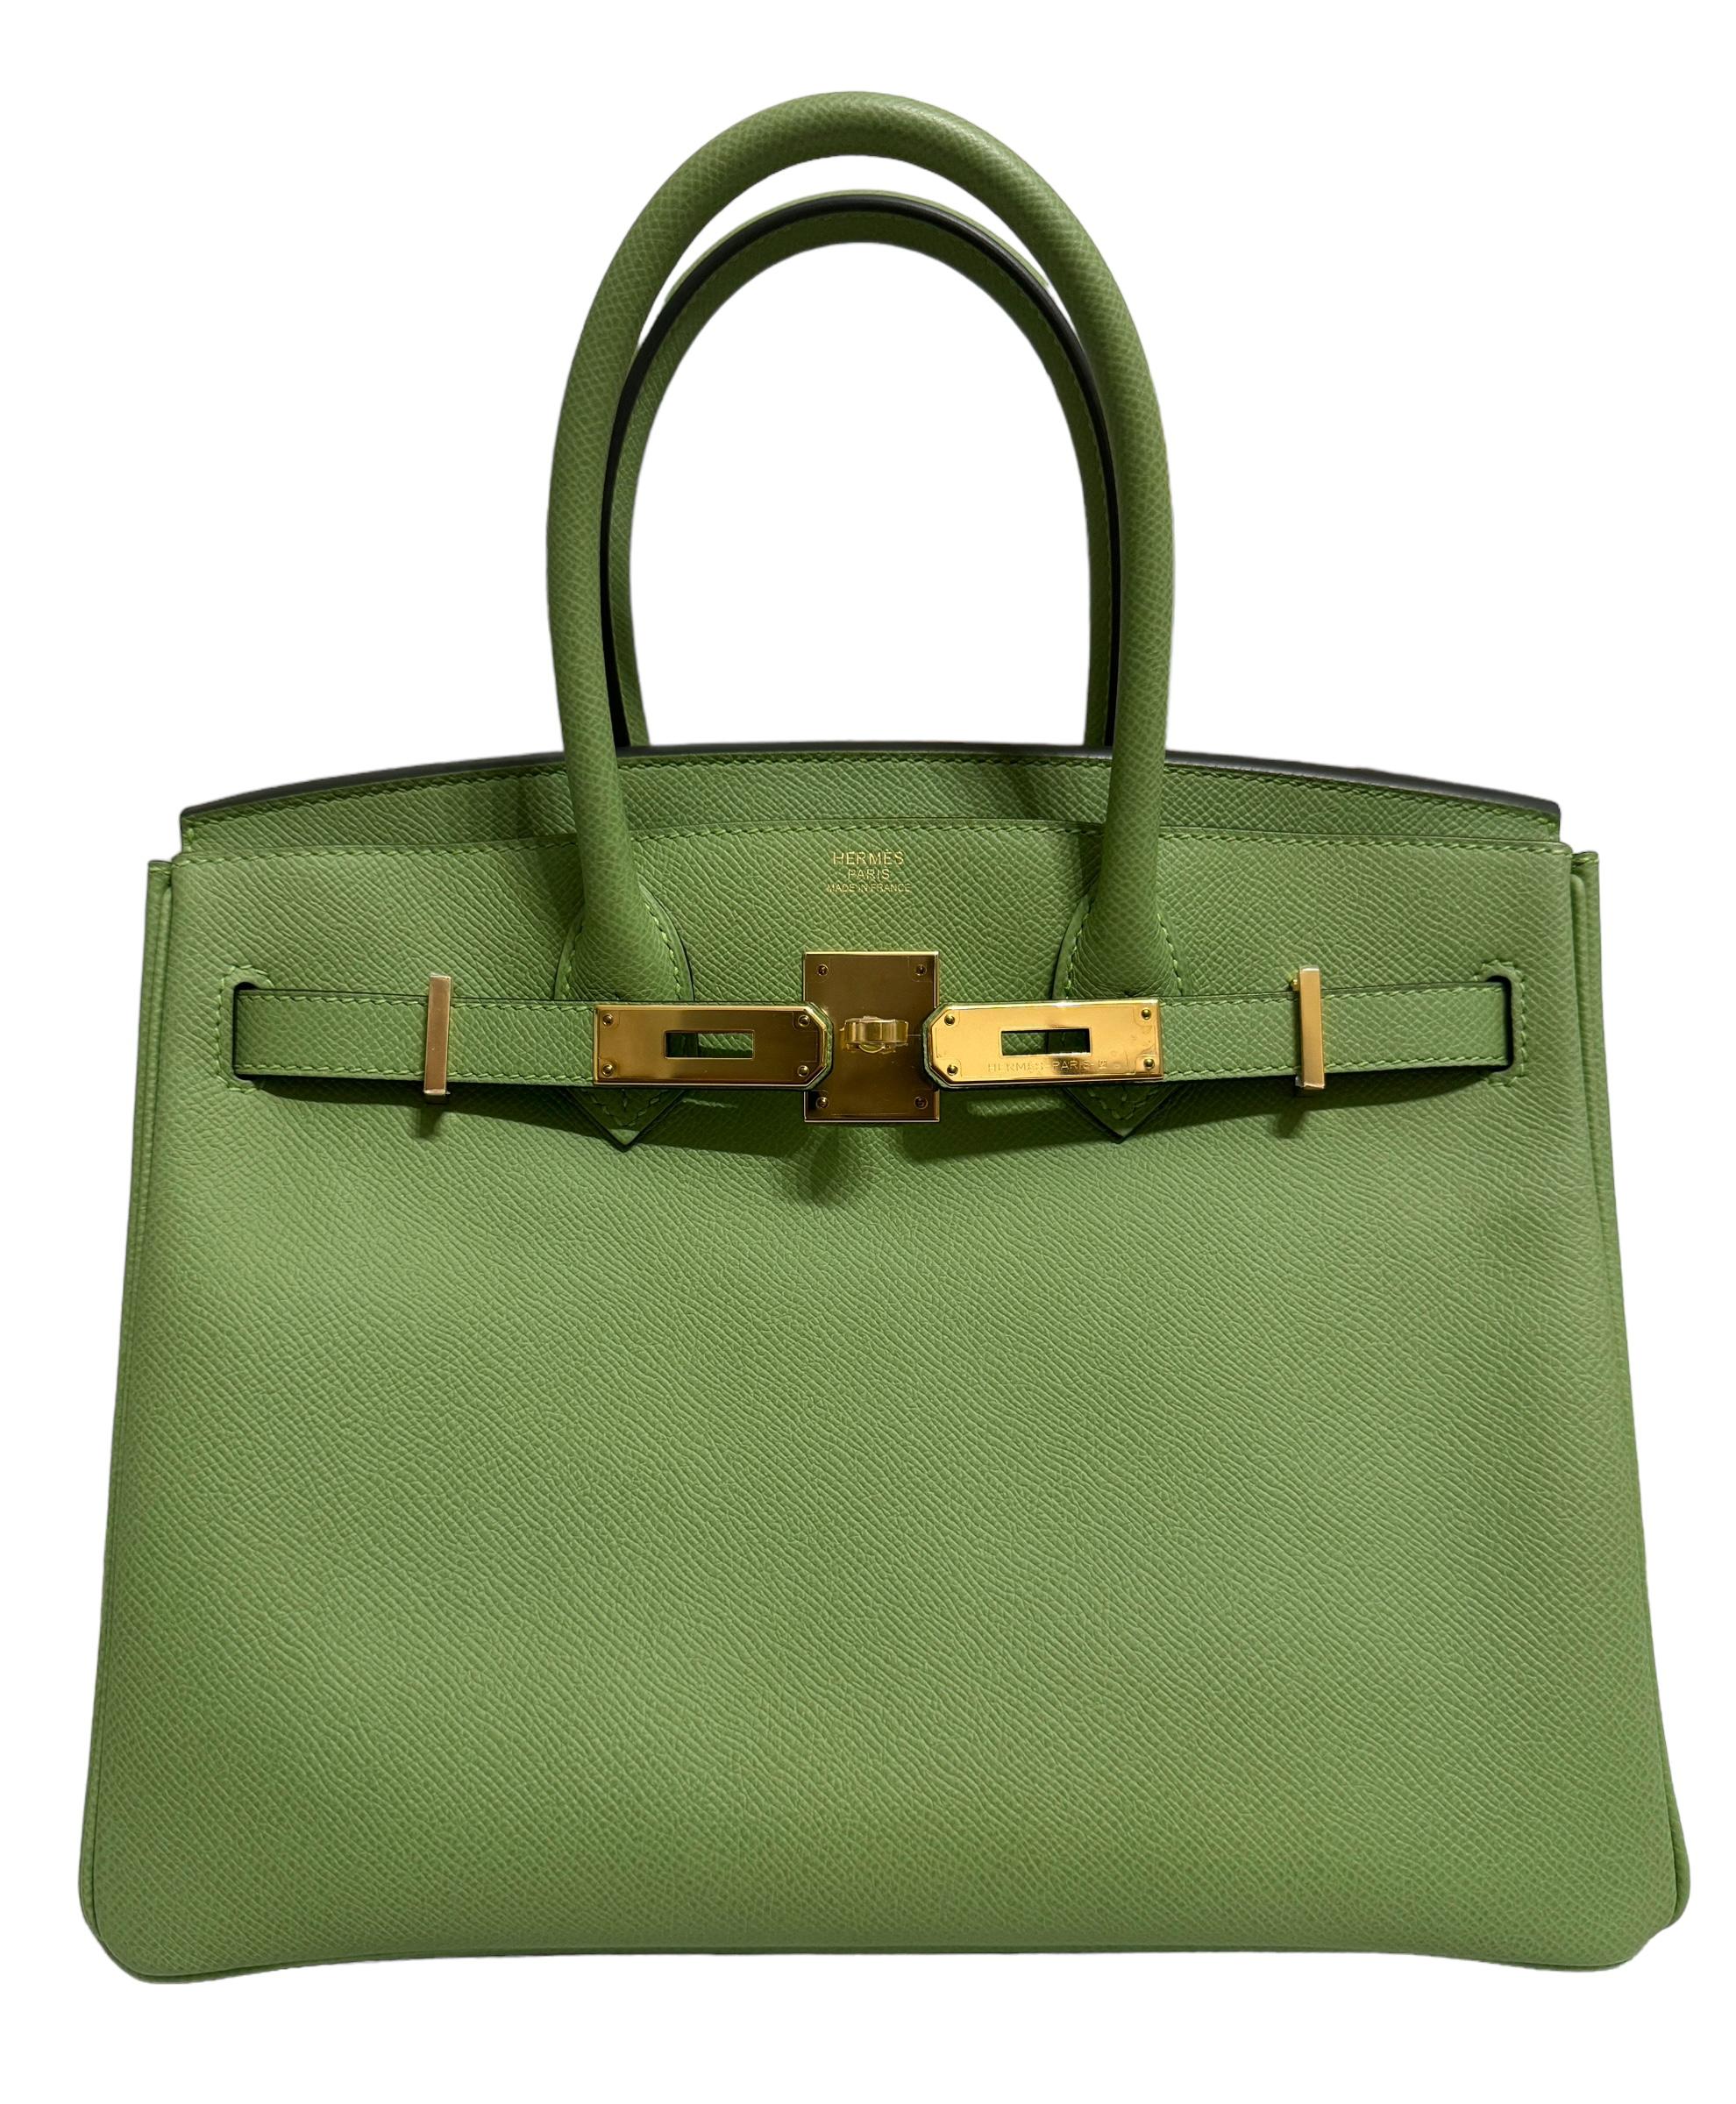 Hermes Birkin 30 Vert Criquet Green Epsom Leather Handbag Gold Hardware 2020 In New Condition For Sale In Miami, FL